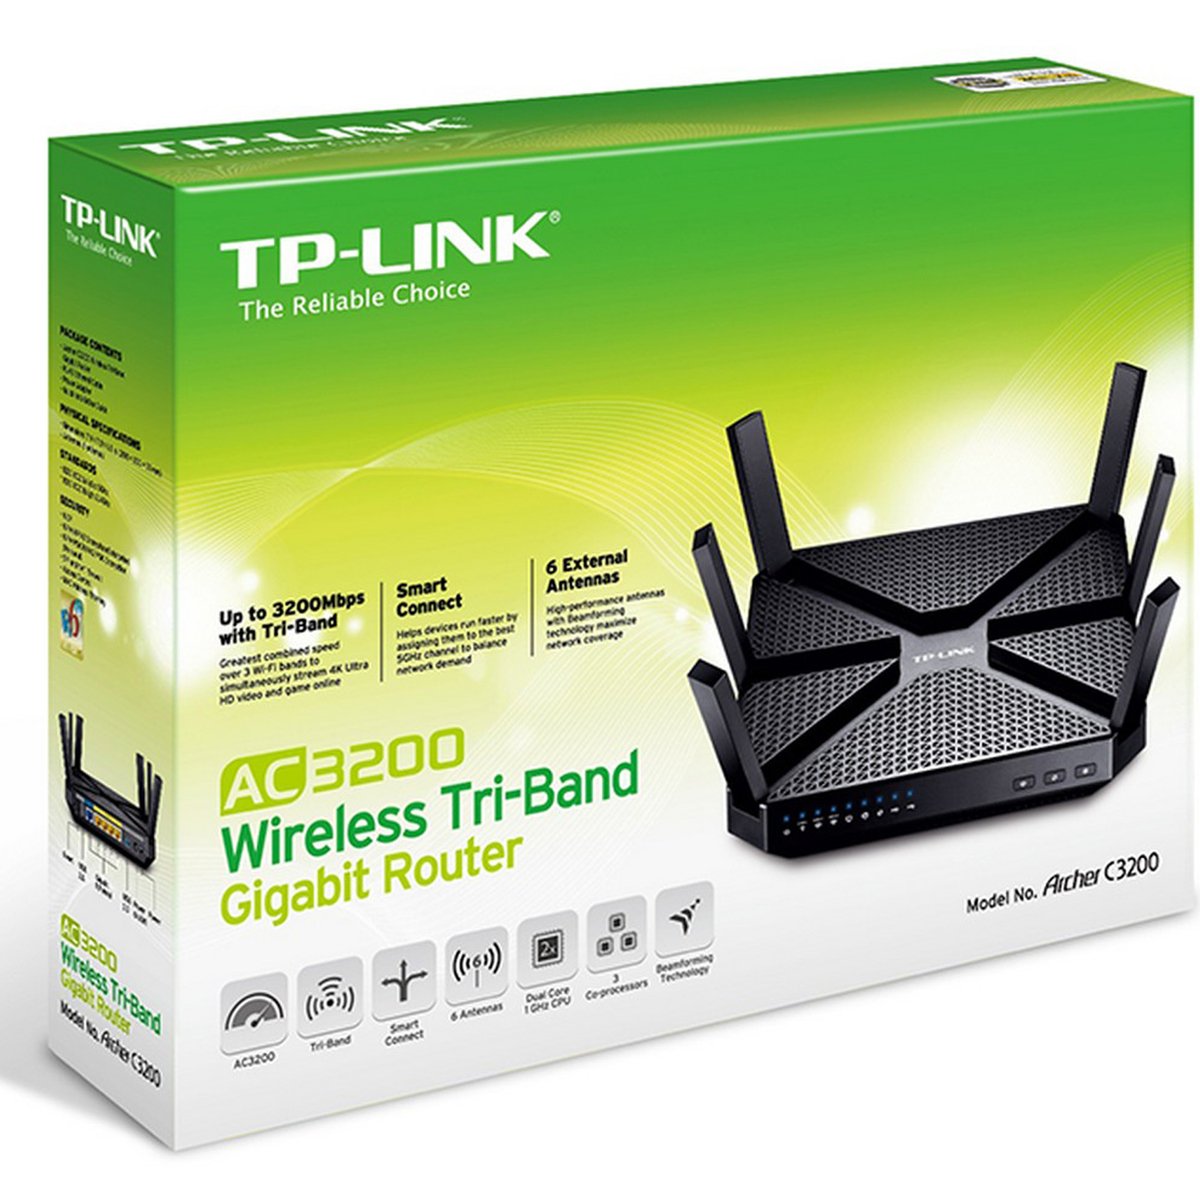 TPLink AC3200 Wireless Tri-Band Gigabit Router Archer C3200